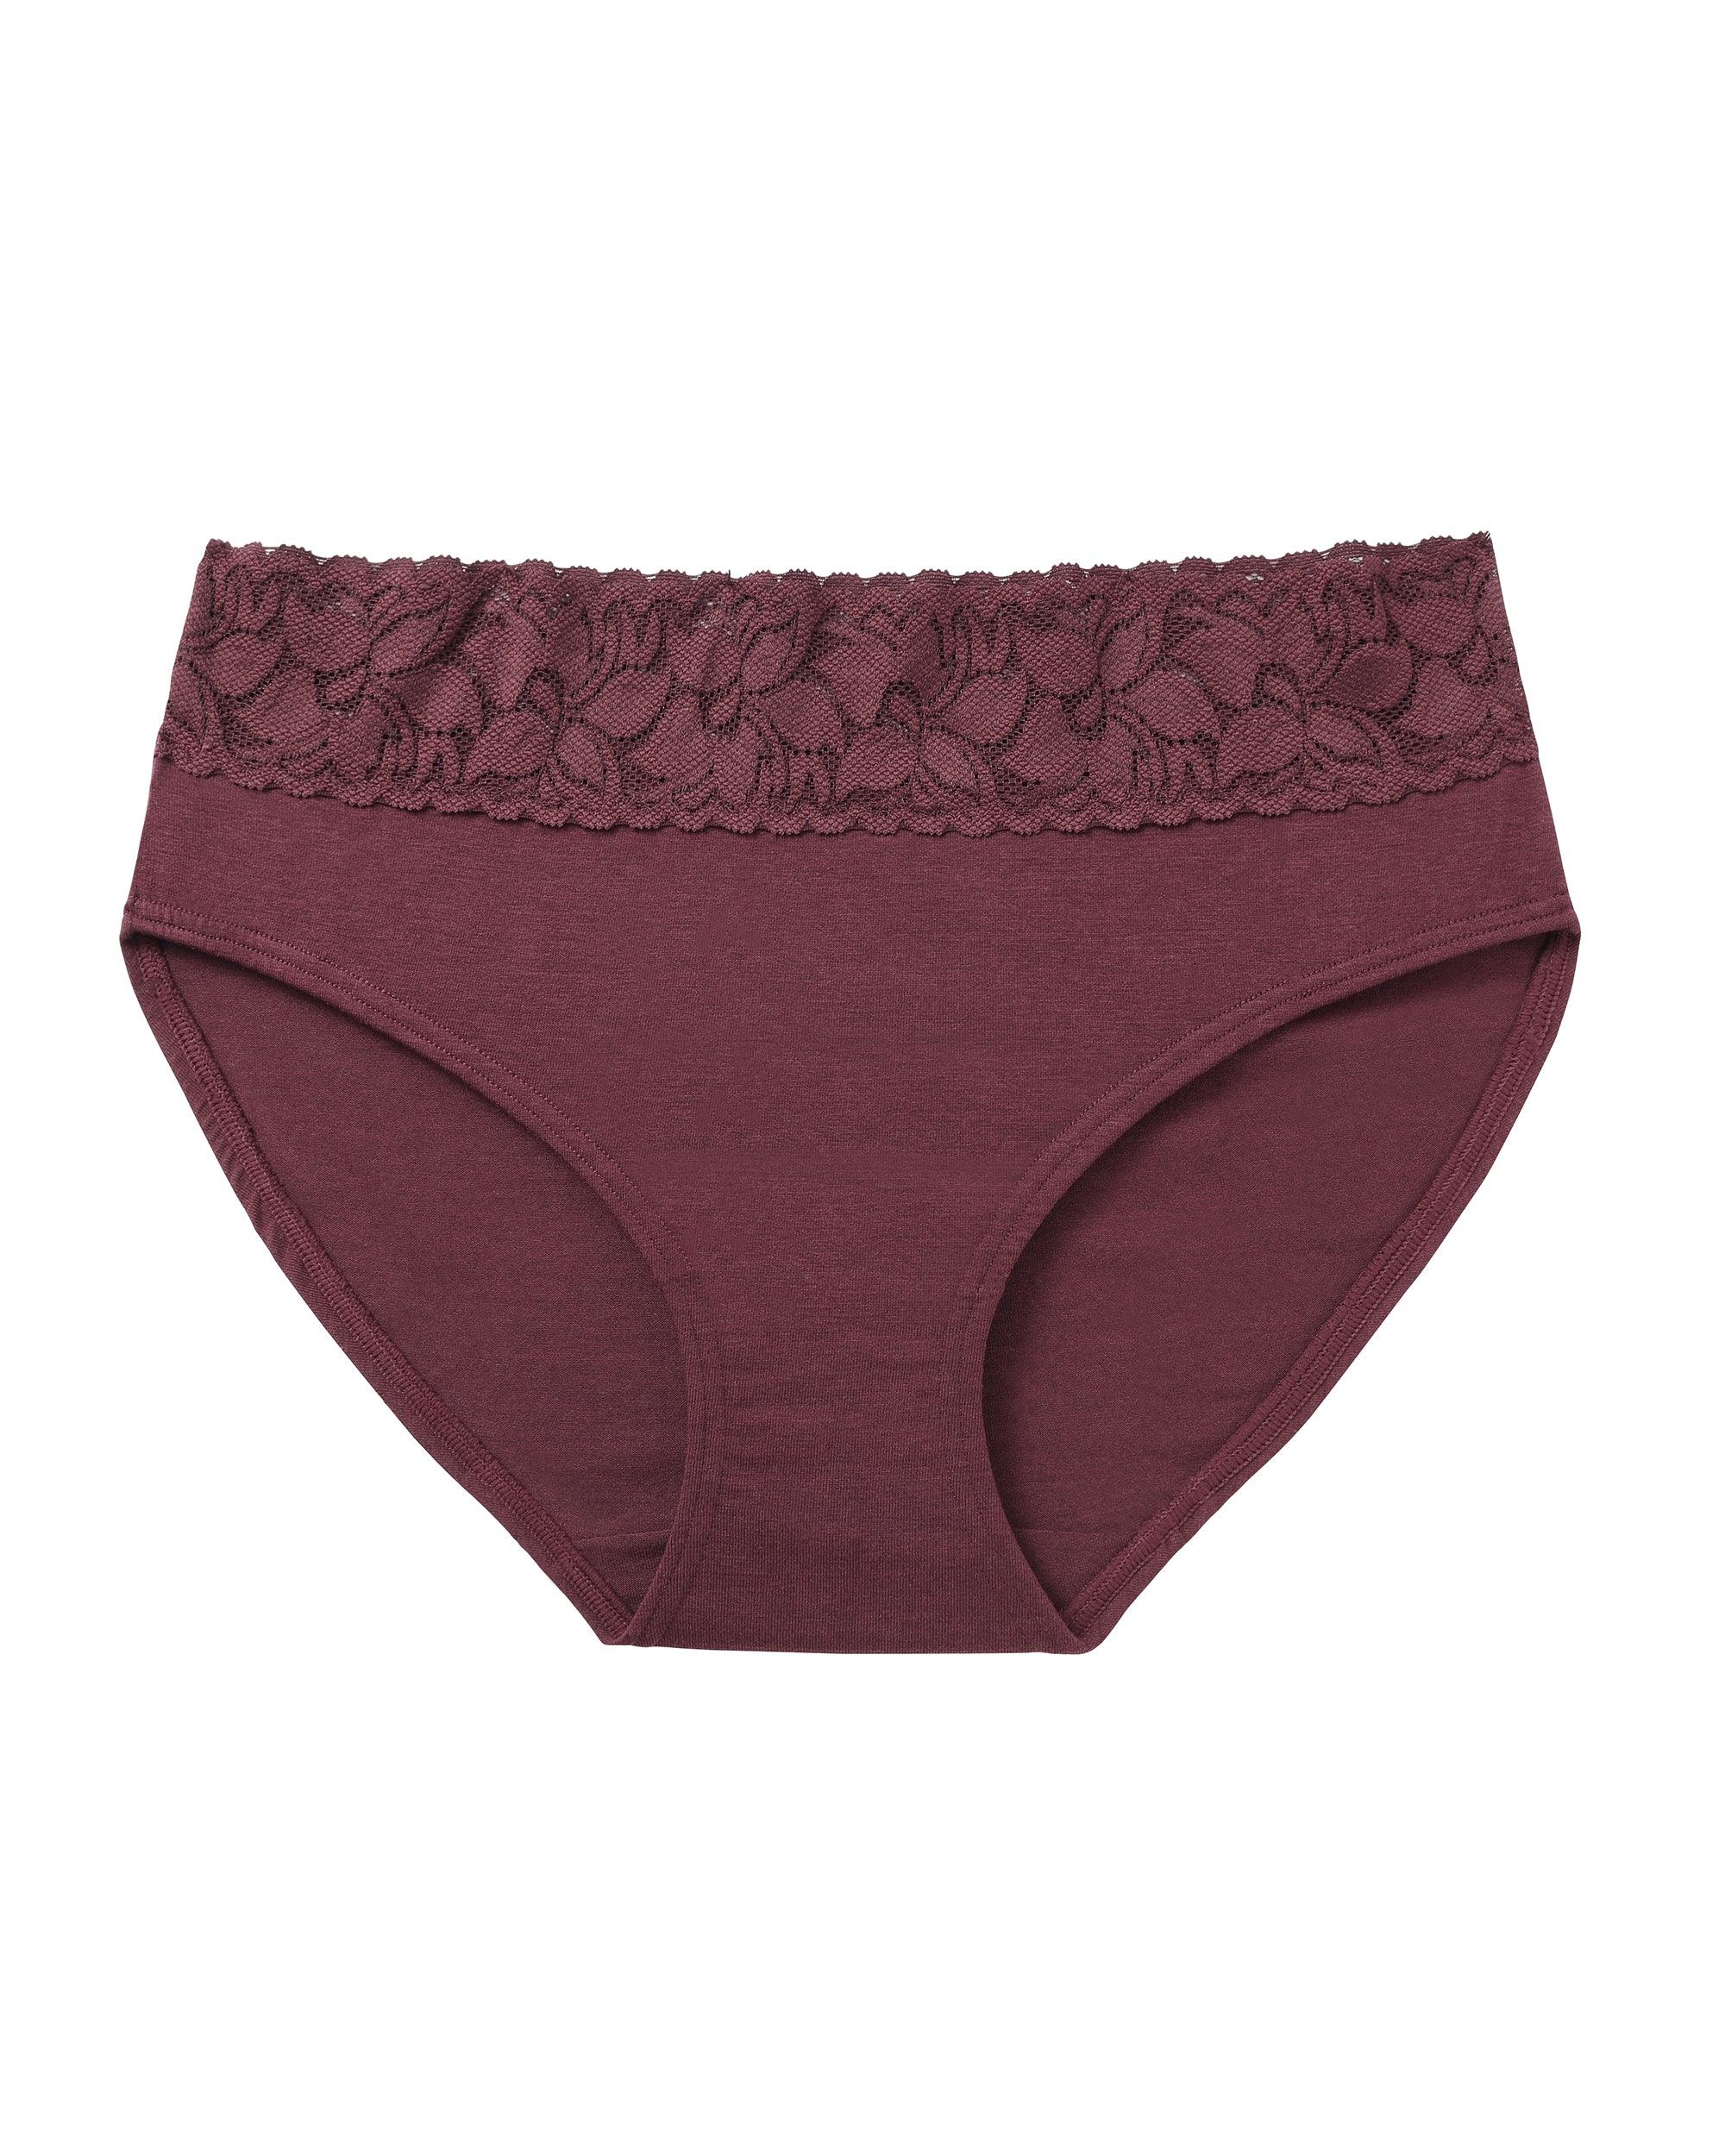 Altheanray Womens Underwear Cotton Briefs Lace Vietnam